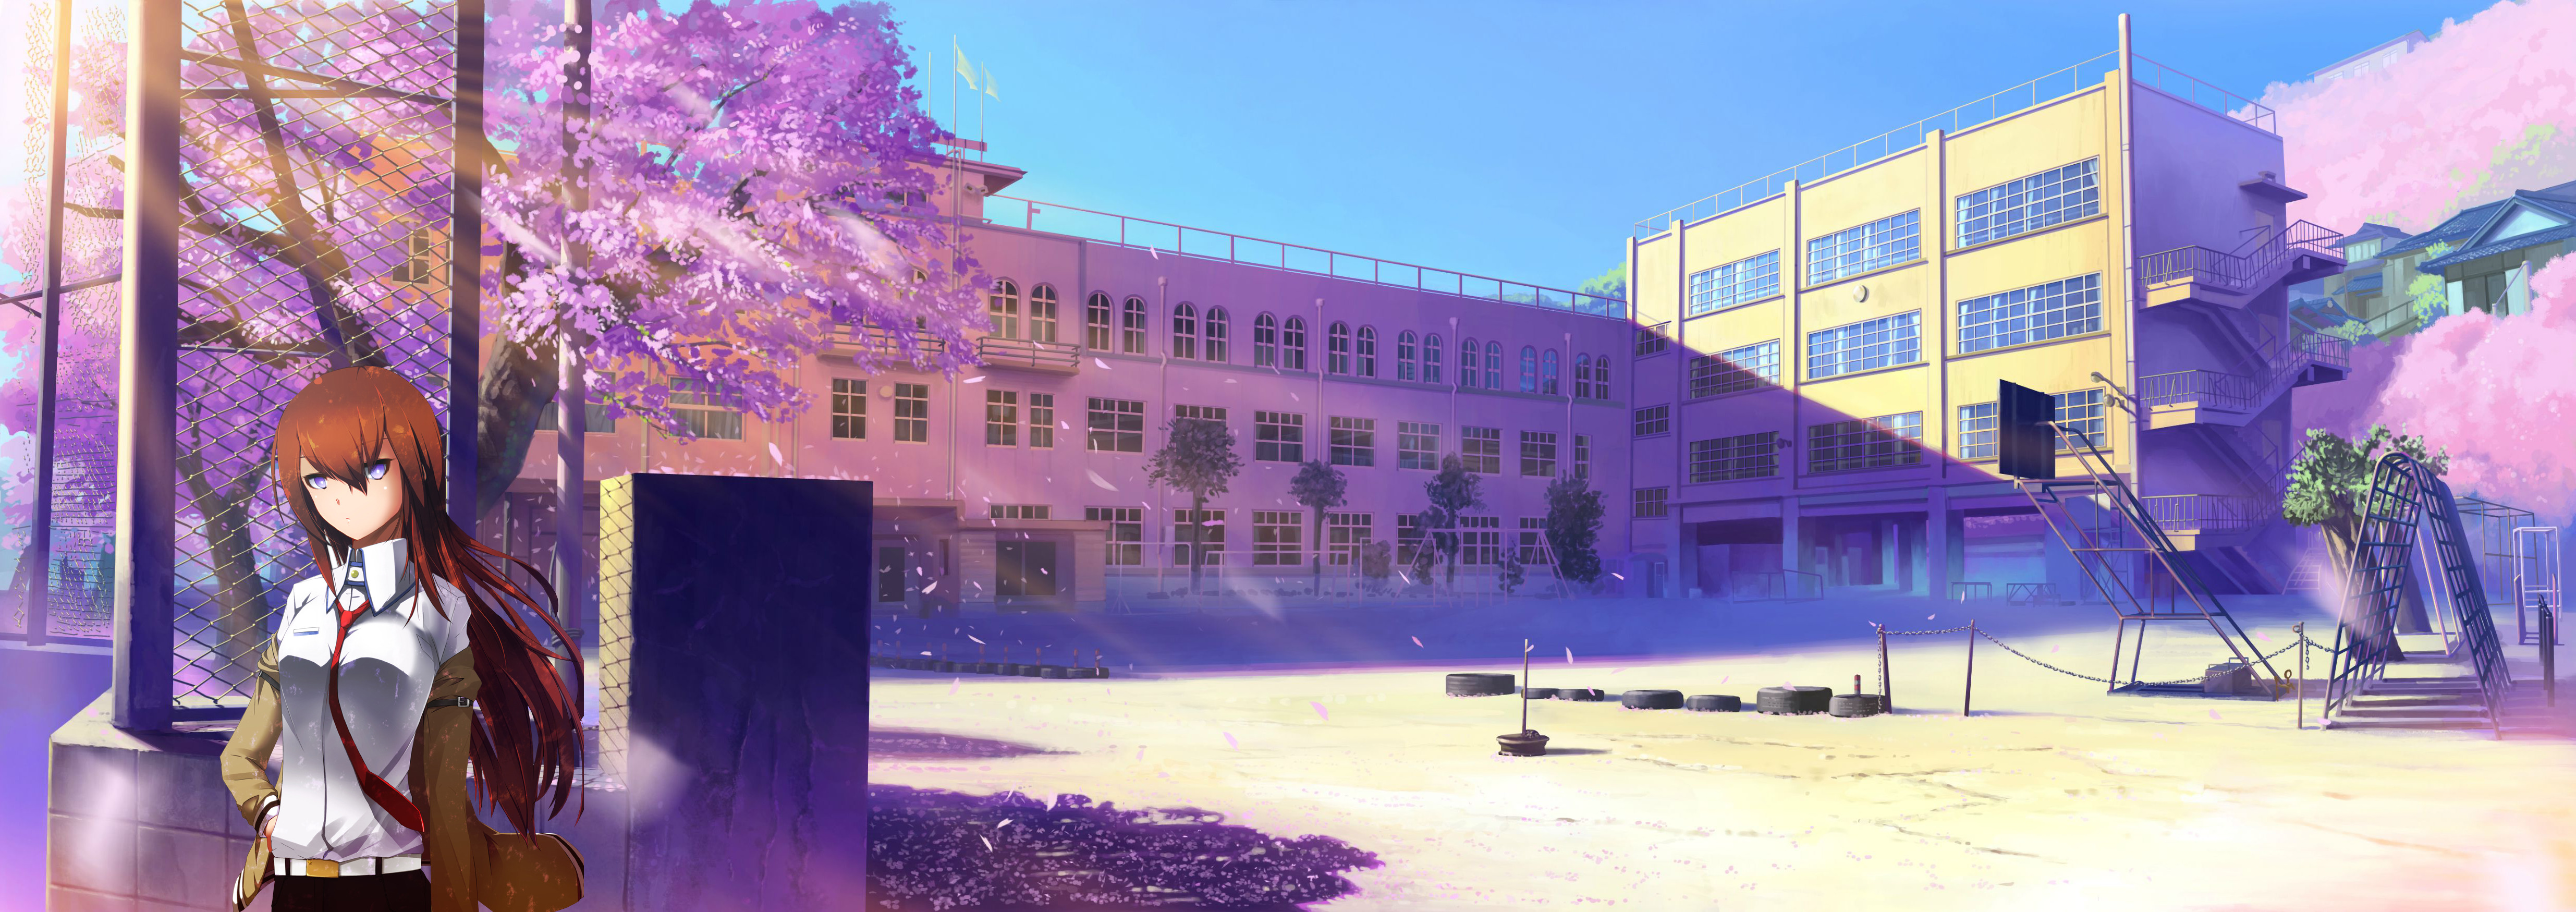 Makise Kurisu, Steins;Gate, School, Cherry Blossom, Clear Sky Wallpaper